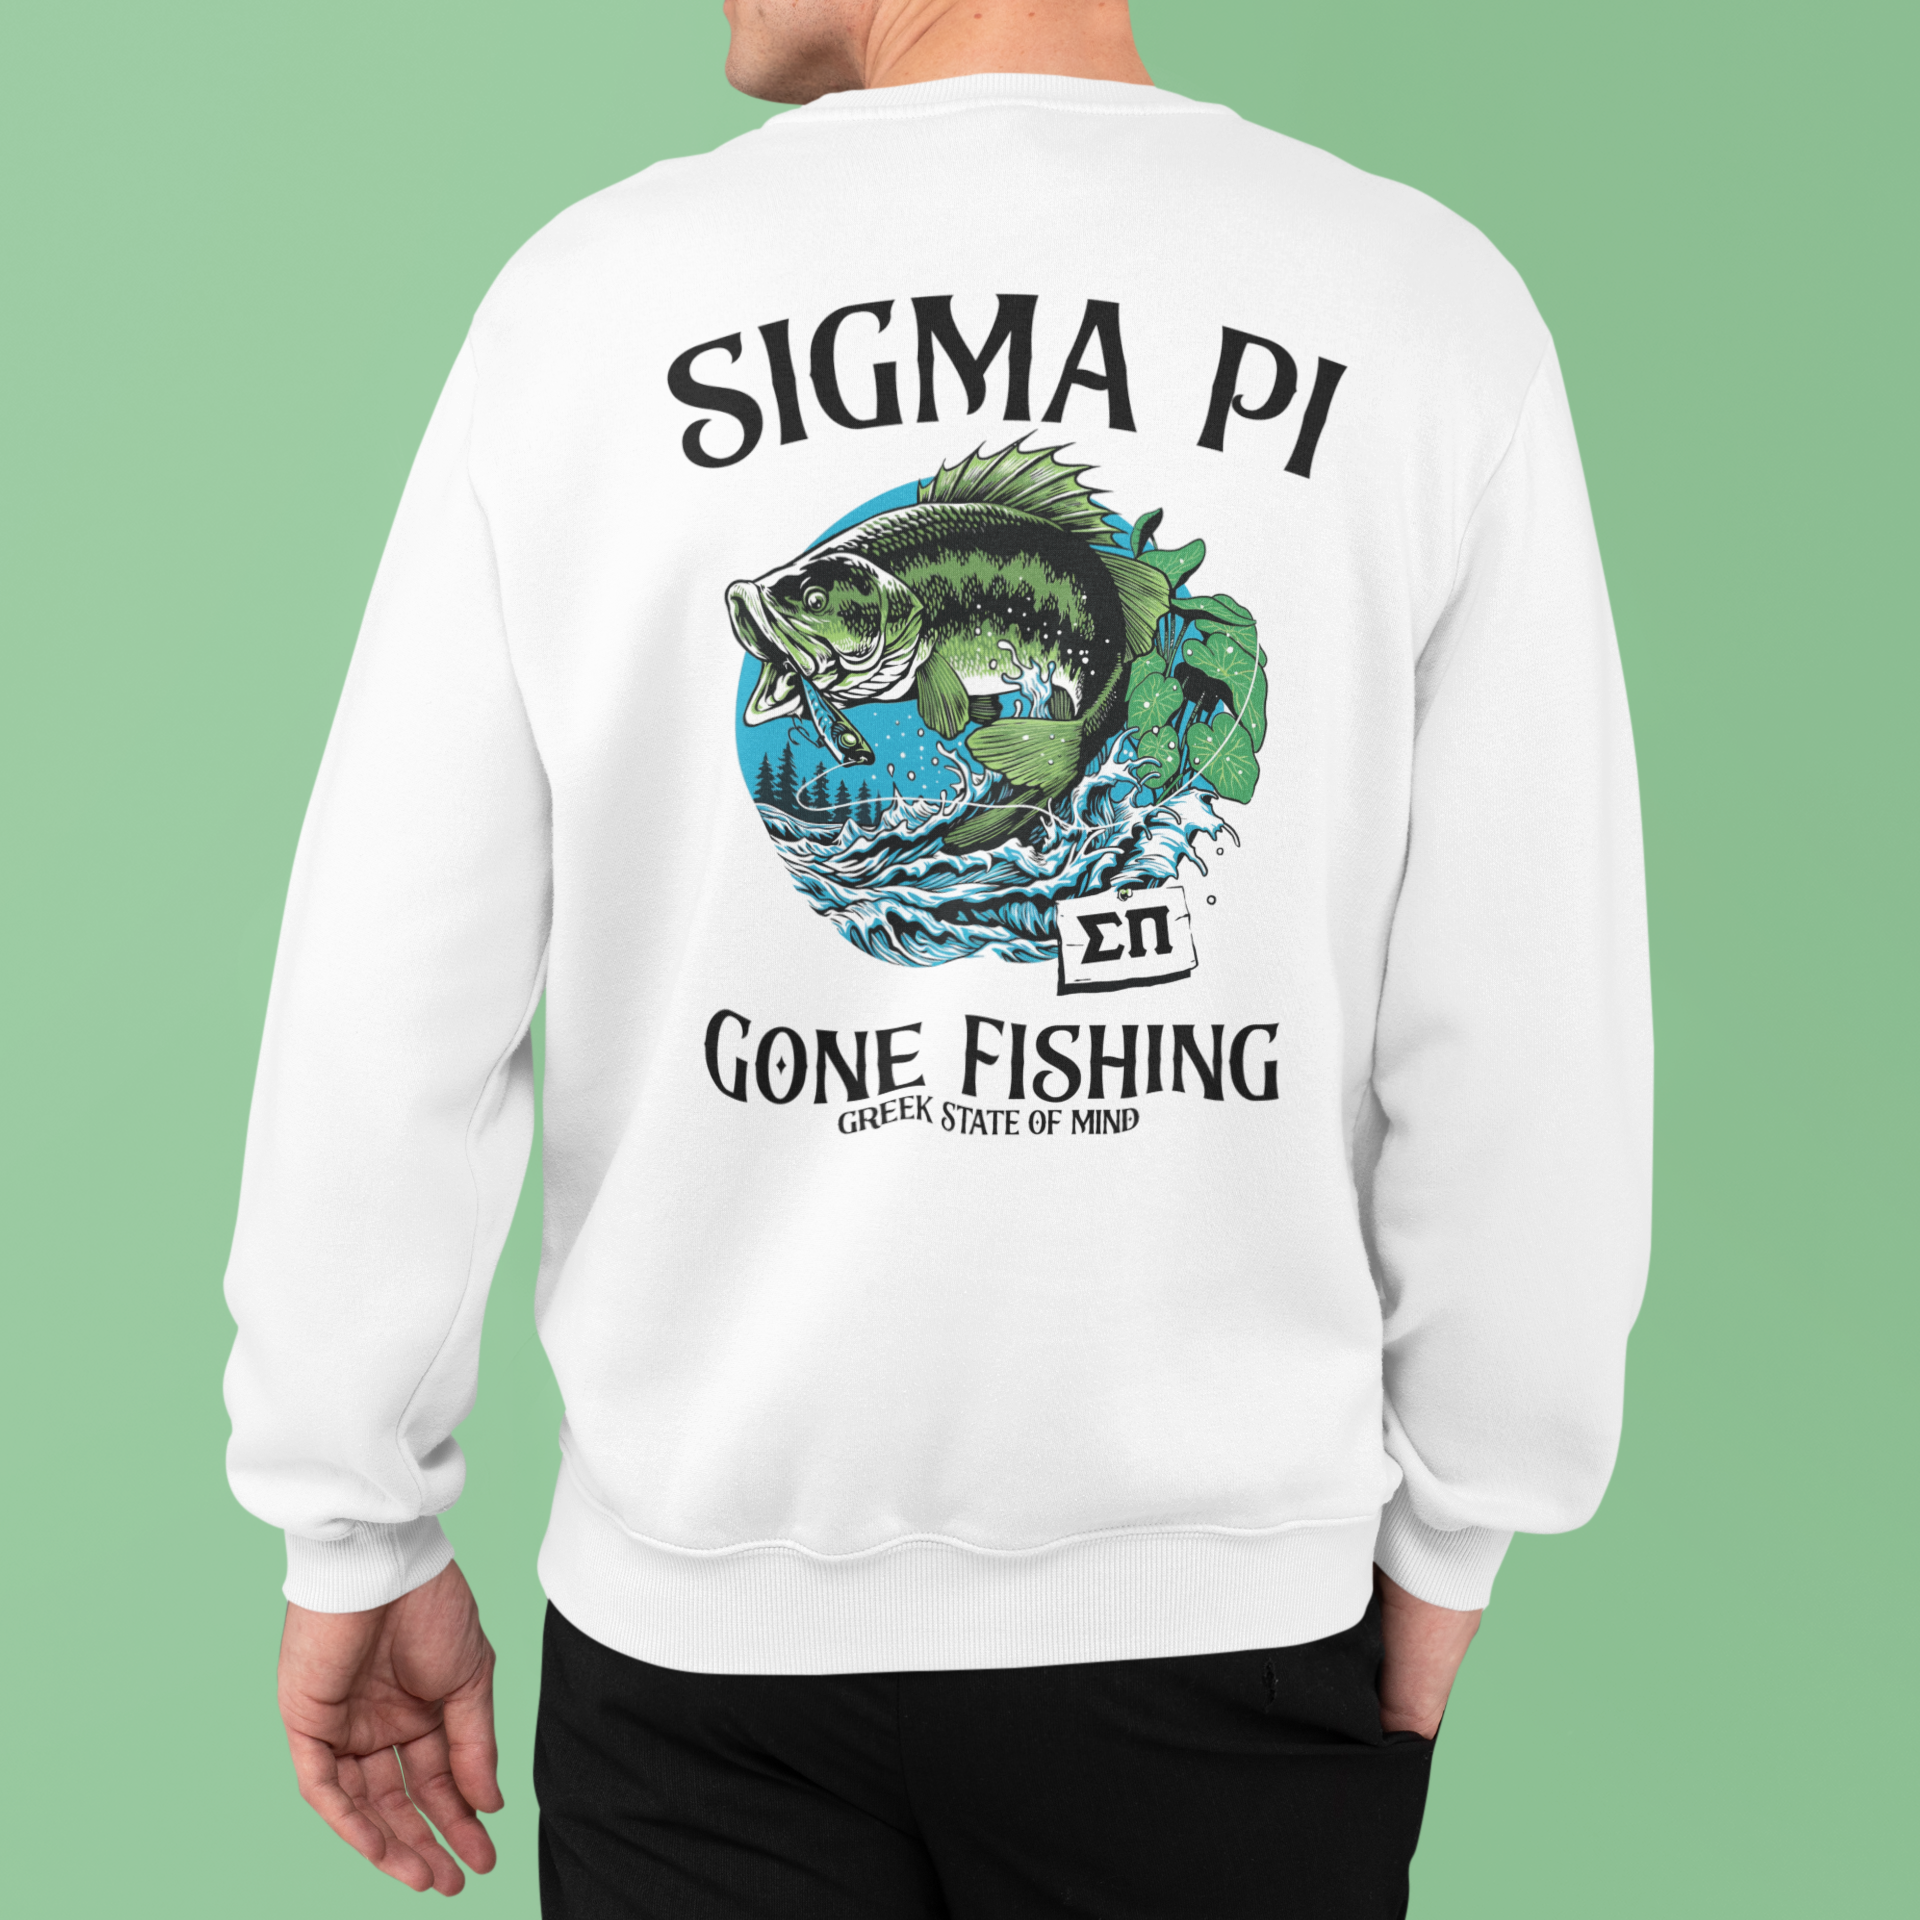 Sigma Pi Graphic Crewneck Sweatshirt | Gone Fishing | Sigma Pi Apparel and Merchandise model 